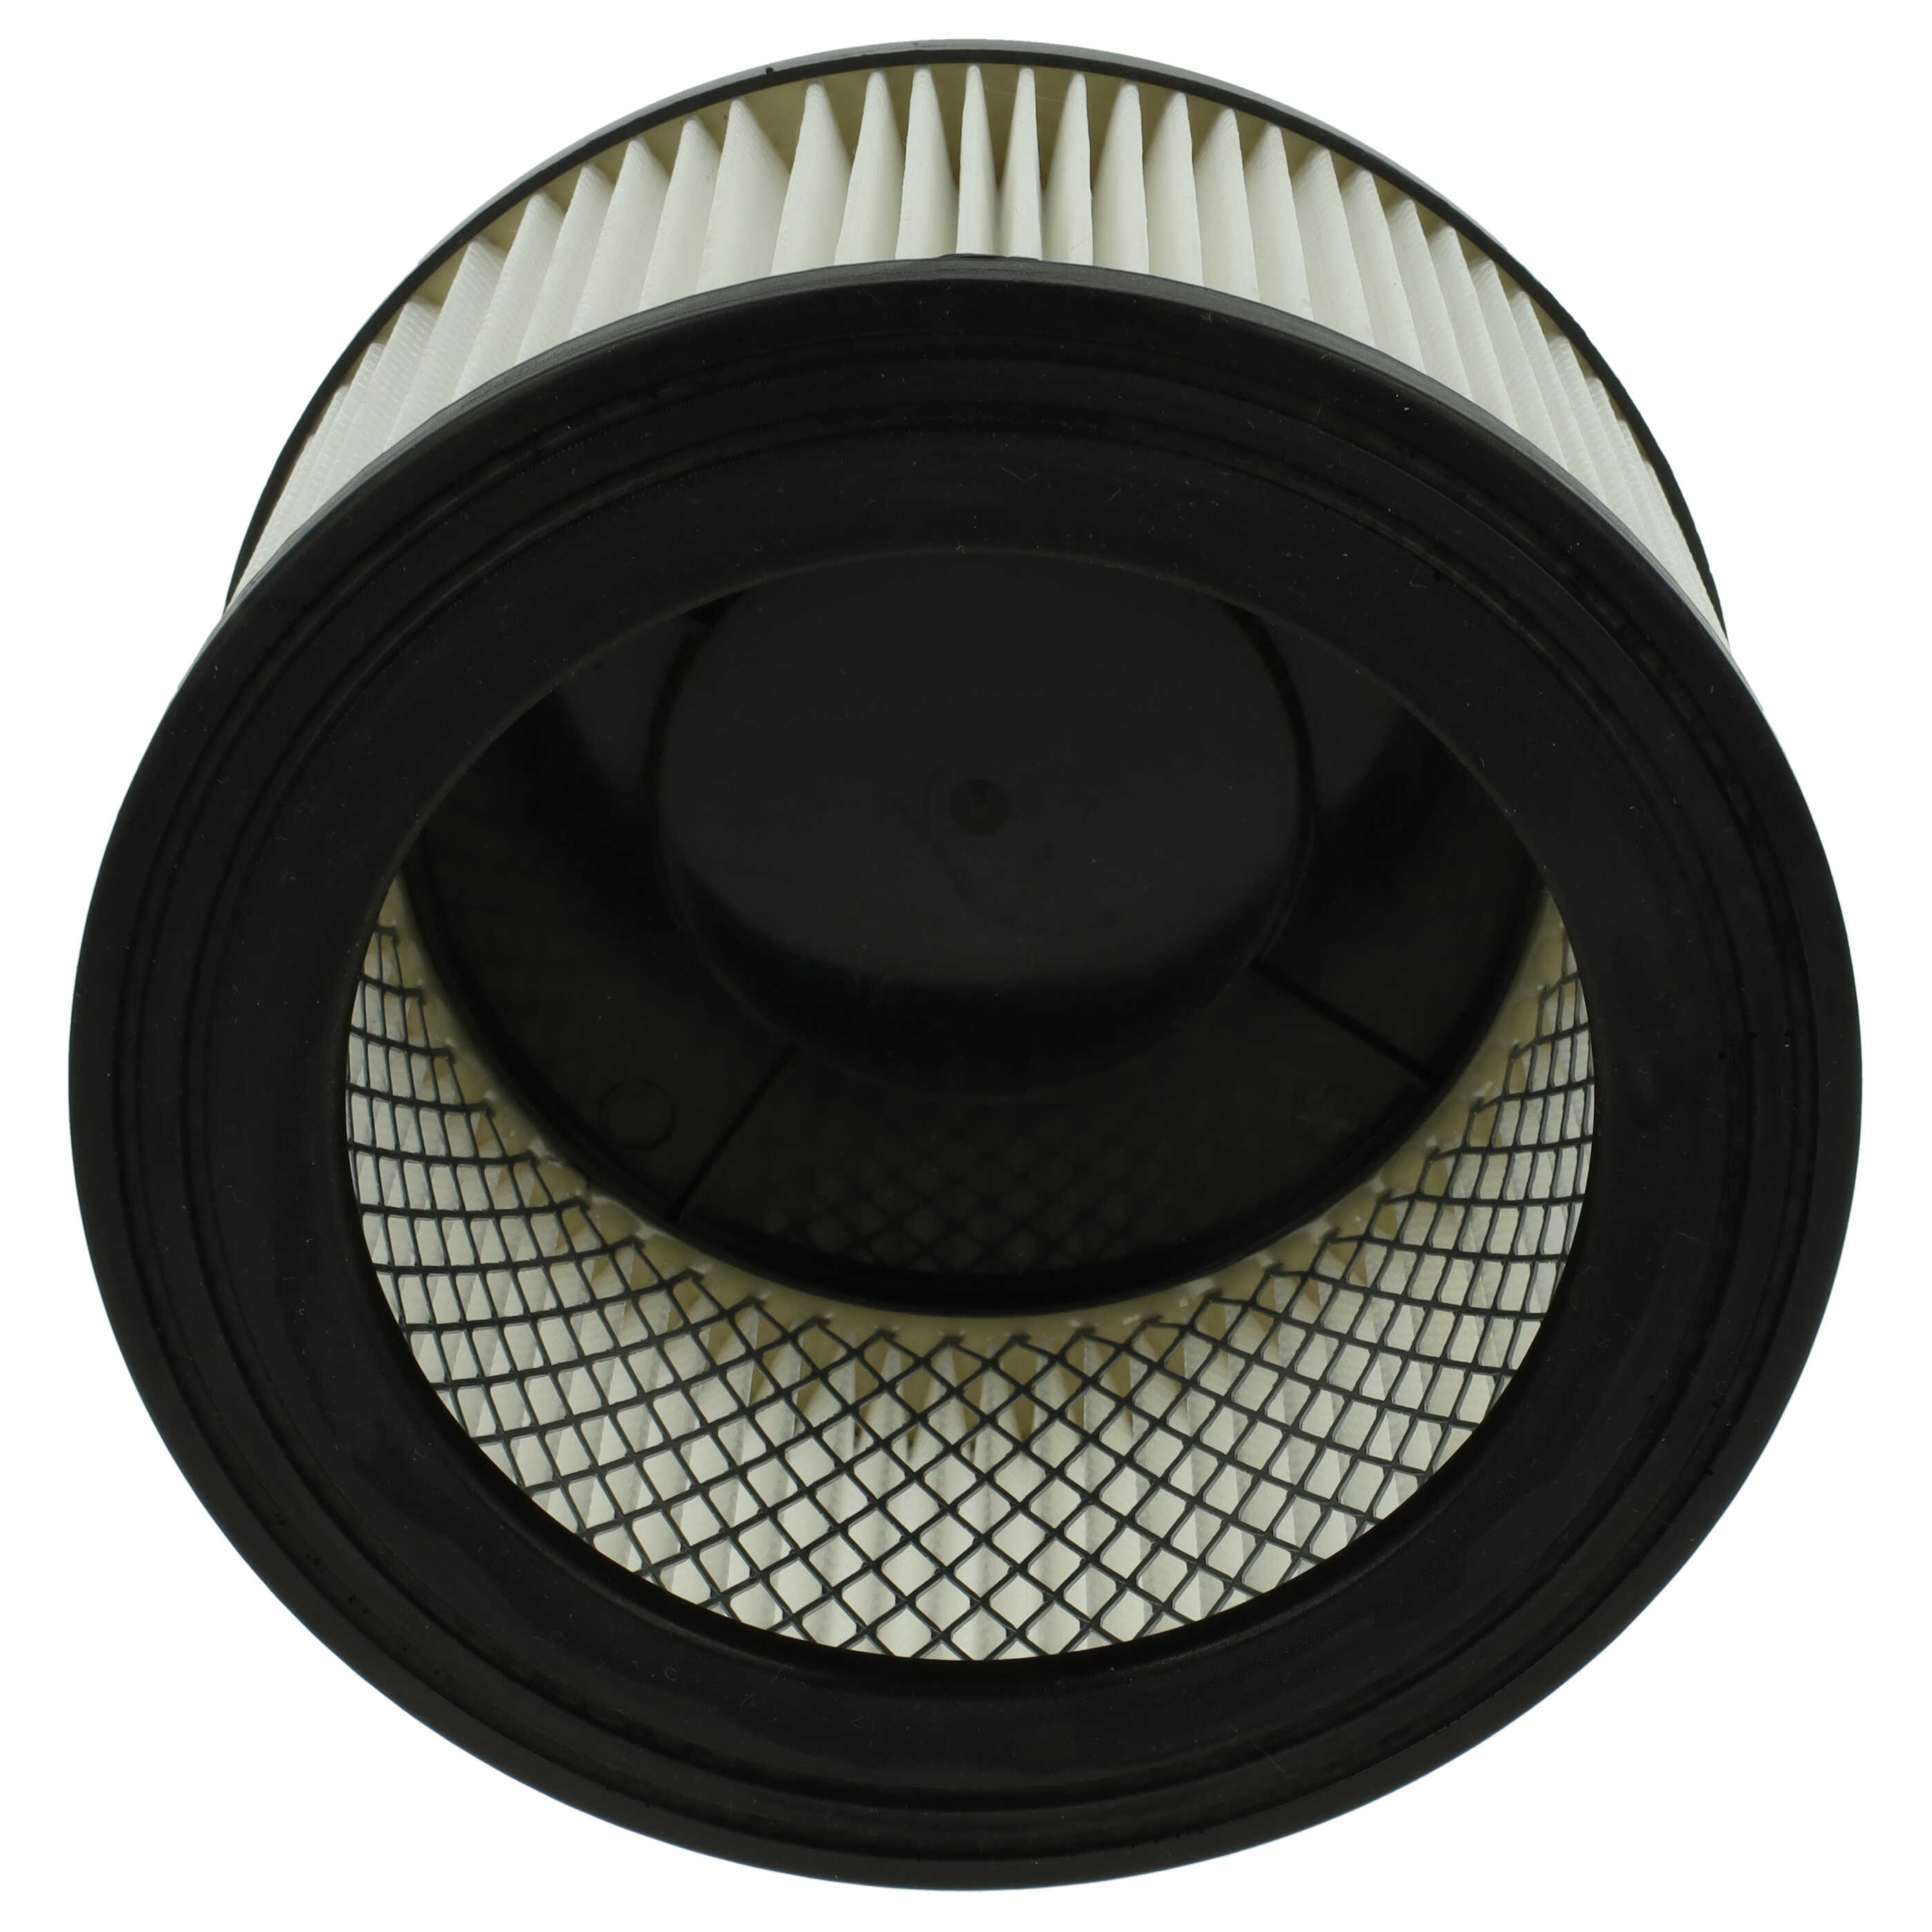 Filtro reemplaza Oxeo 760023 para aspiradora chimeneas - filtro Hepa negro / blanco